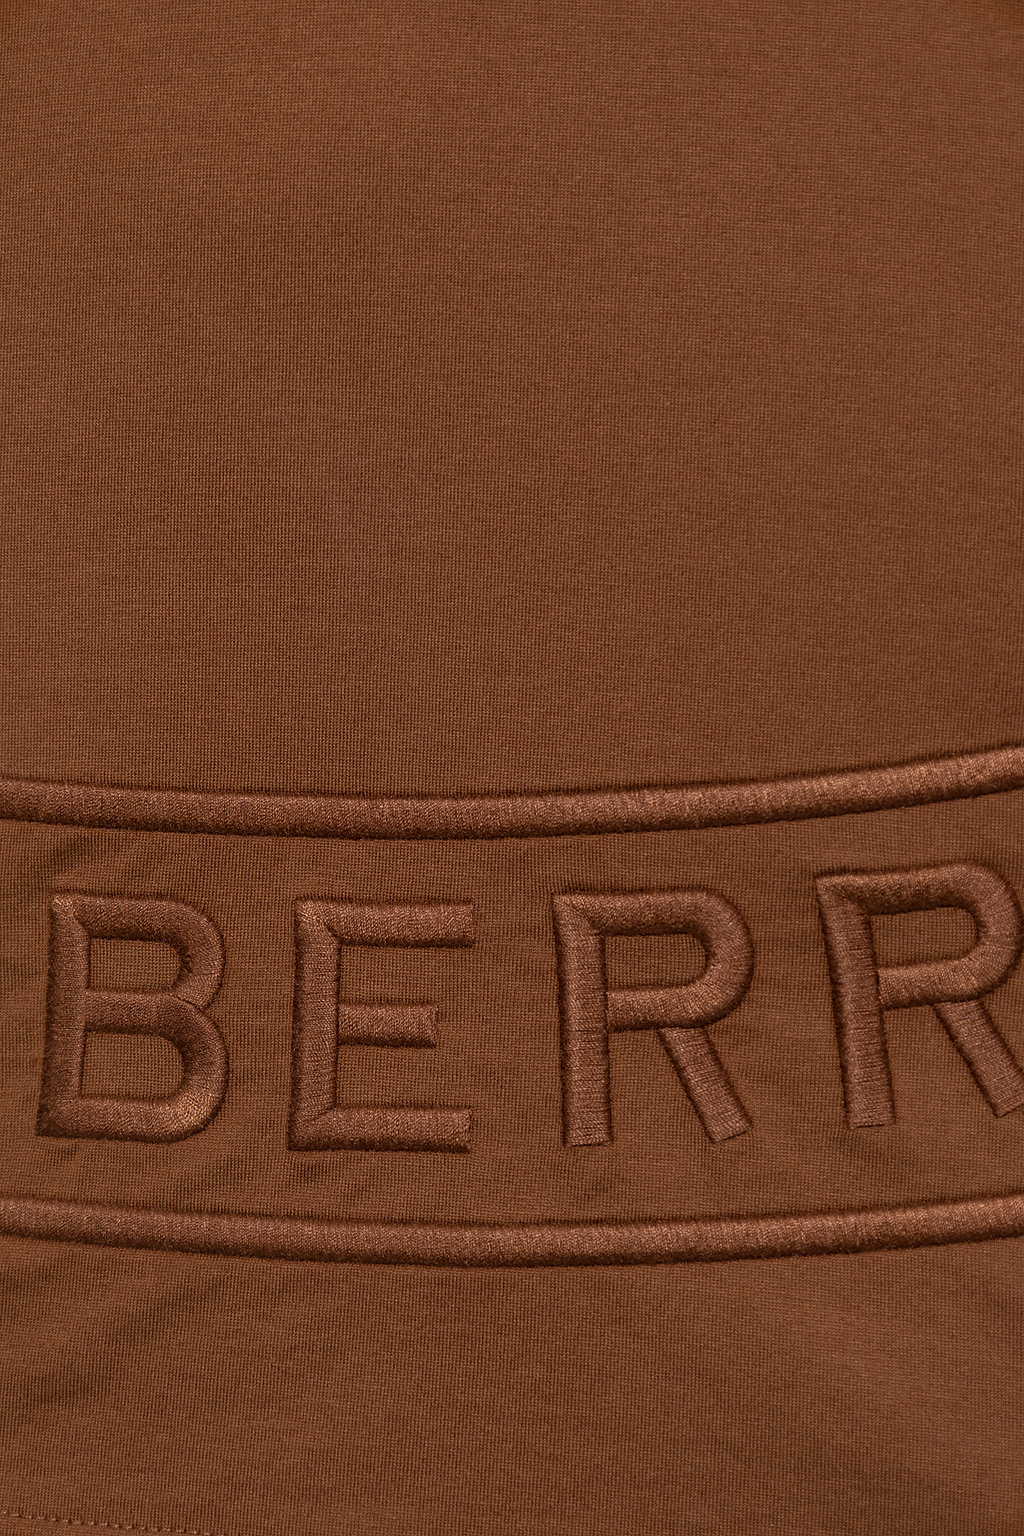 Burberry ‘Alleyn’ T-shirt